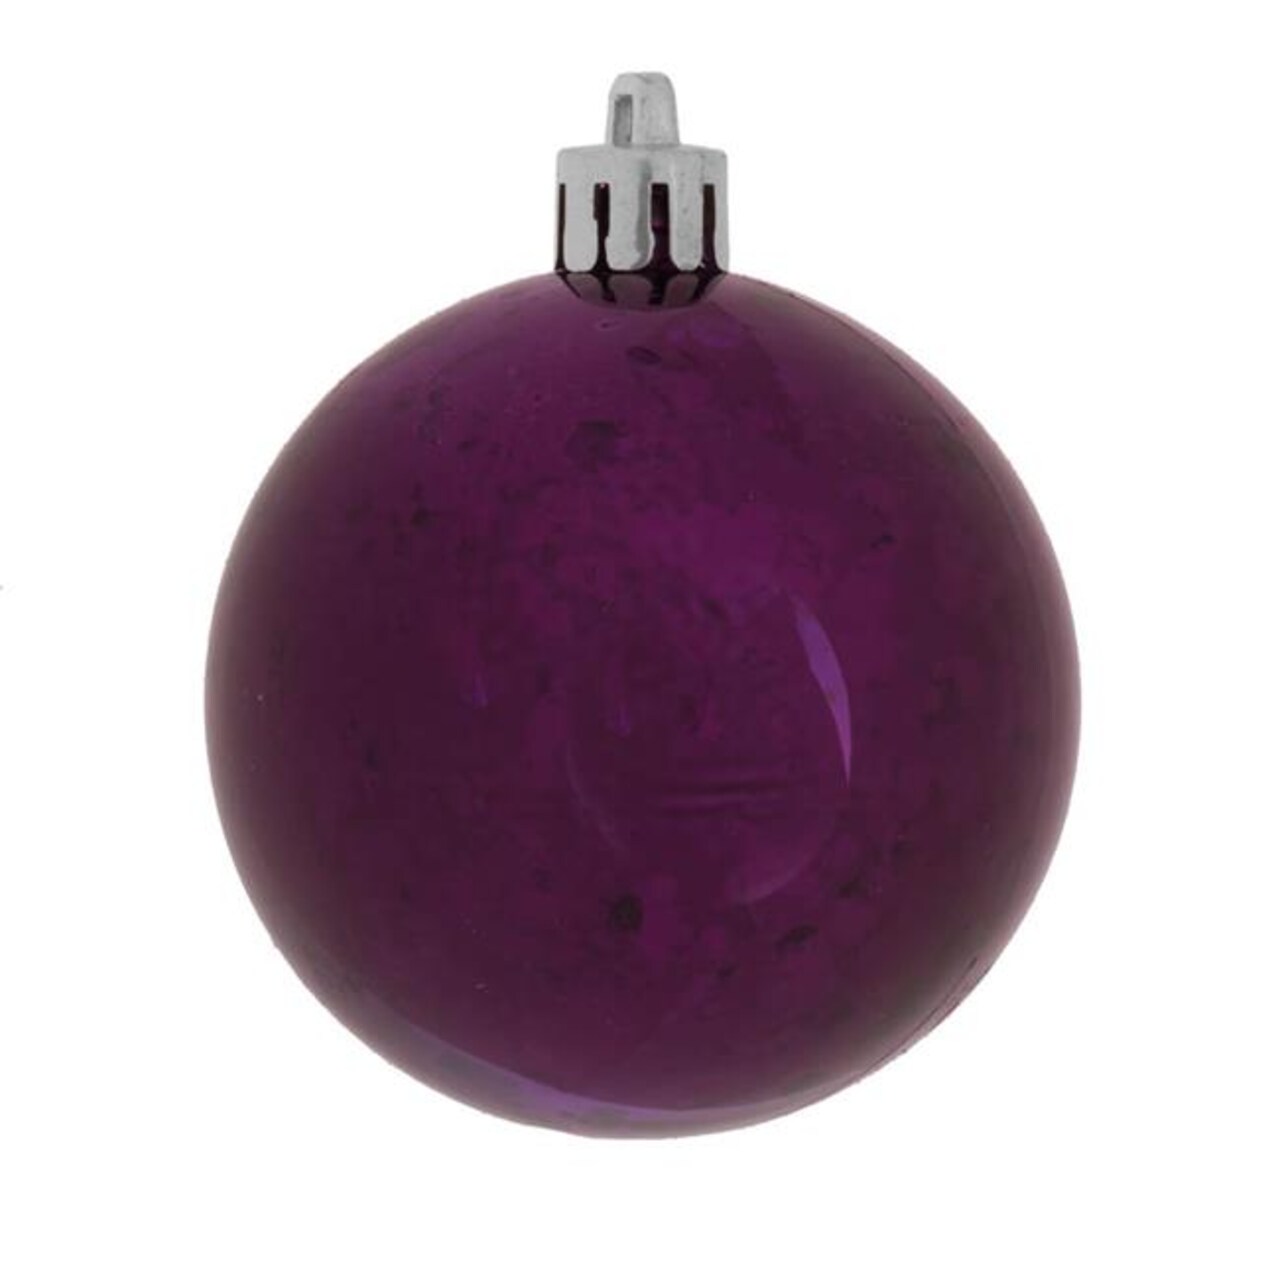 Plum Shiny Mercury Ball Ornament - 4 in. - 6 per Bag